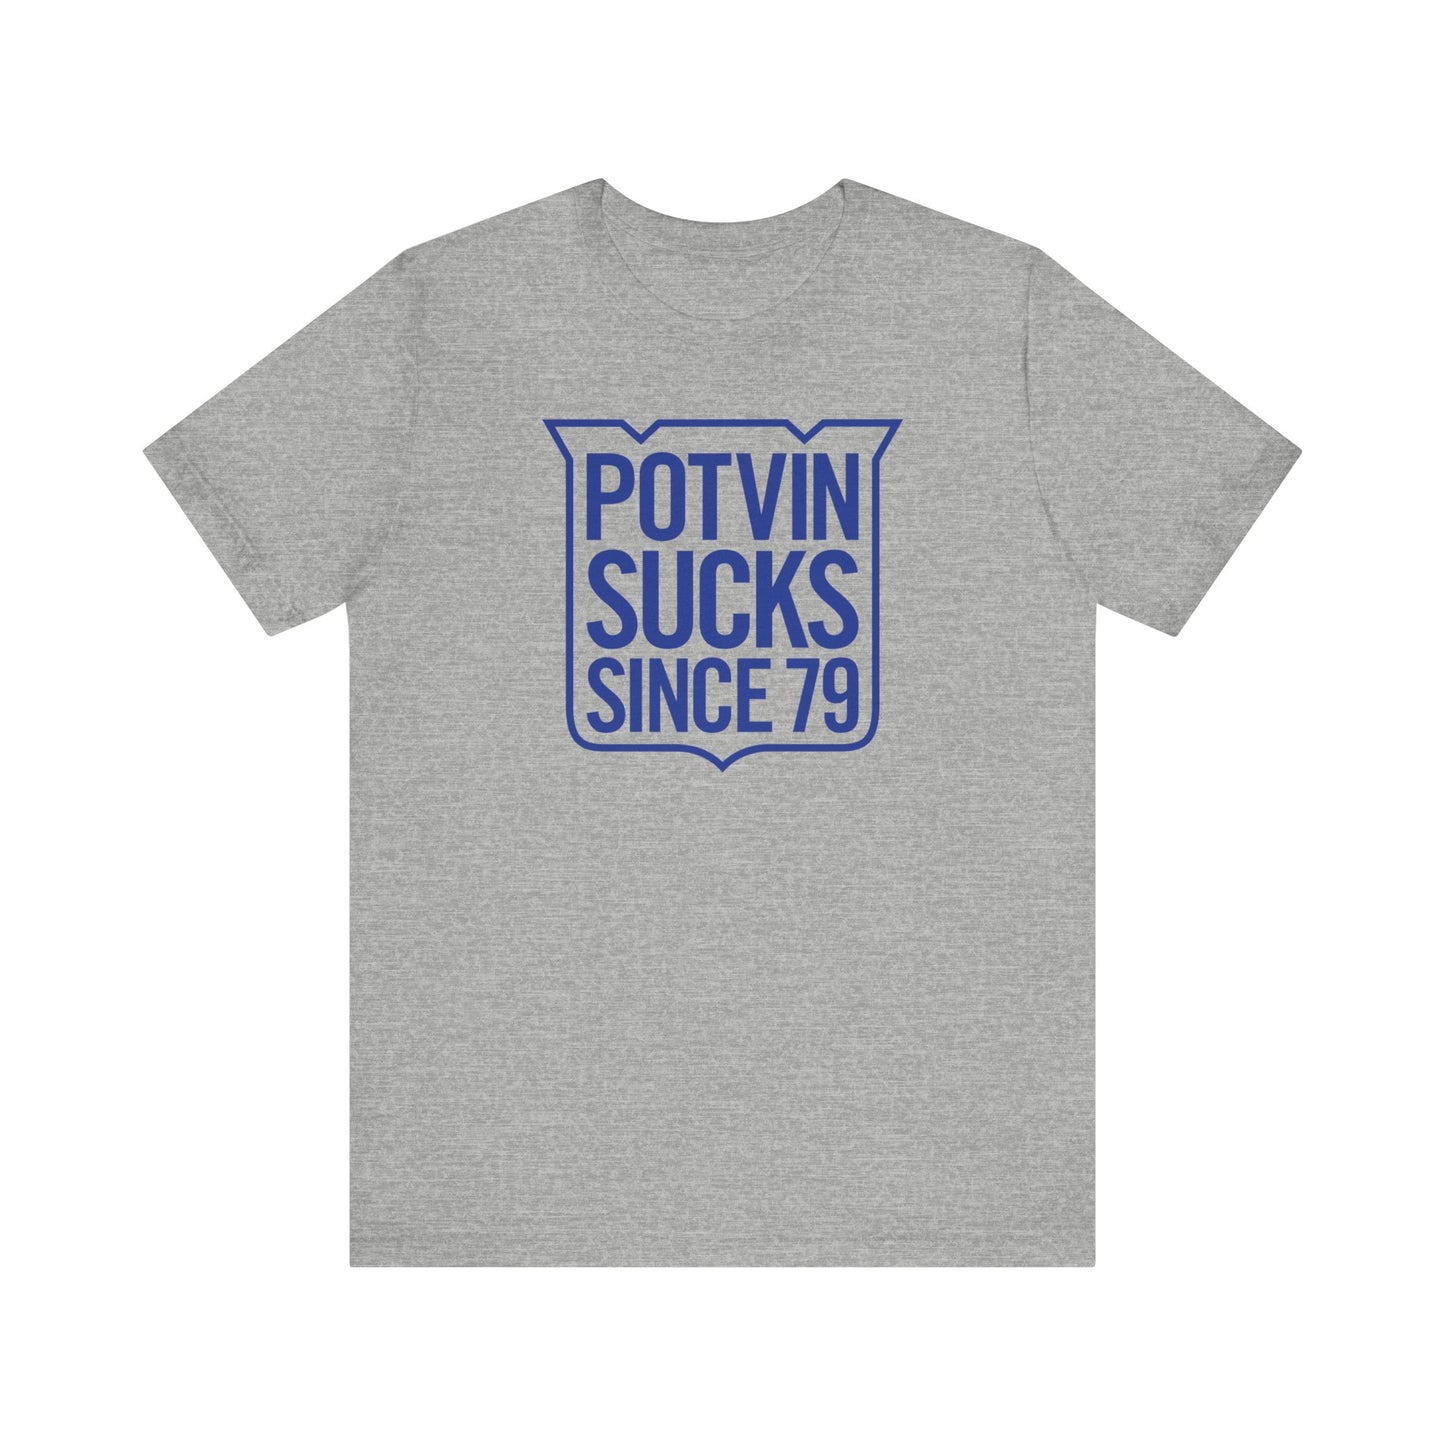 New York - Potvin Sucks Shirt